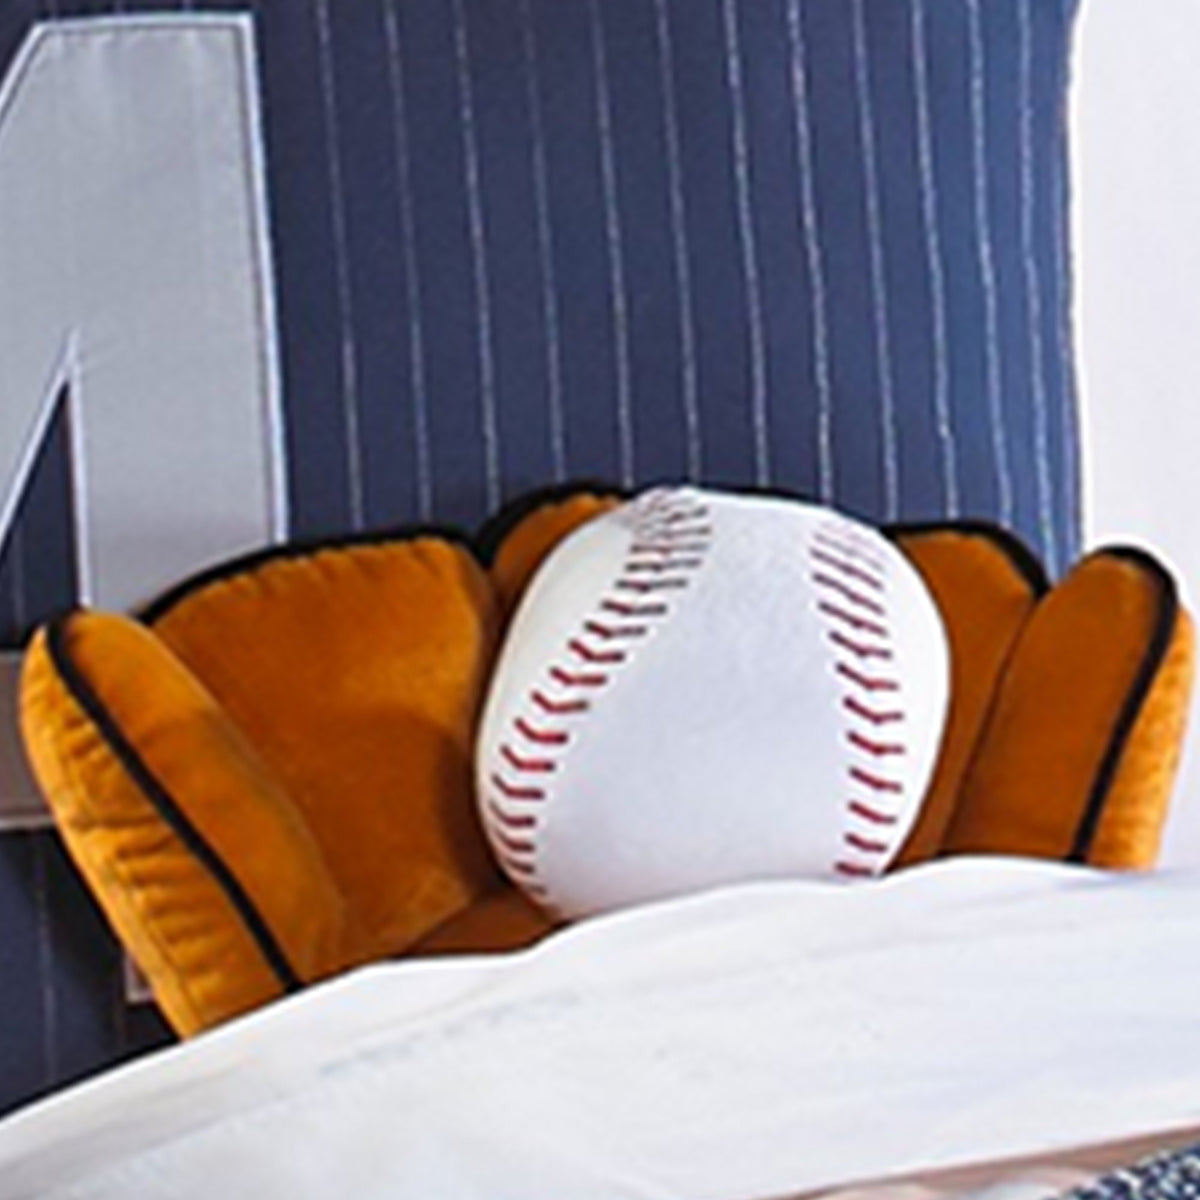 6 Piece Polyester Full Comforter Set with Baseball Inspired Print, Blue - BM225162